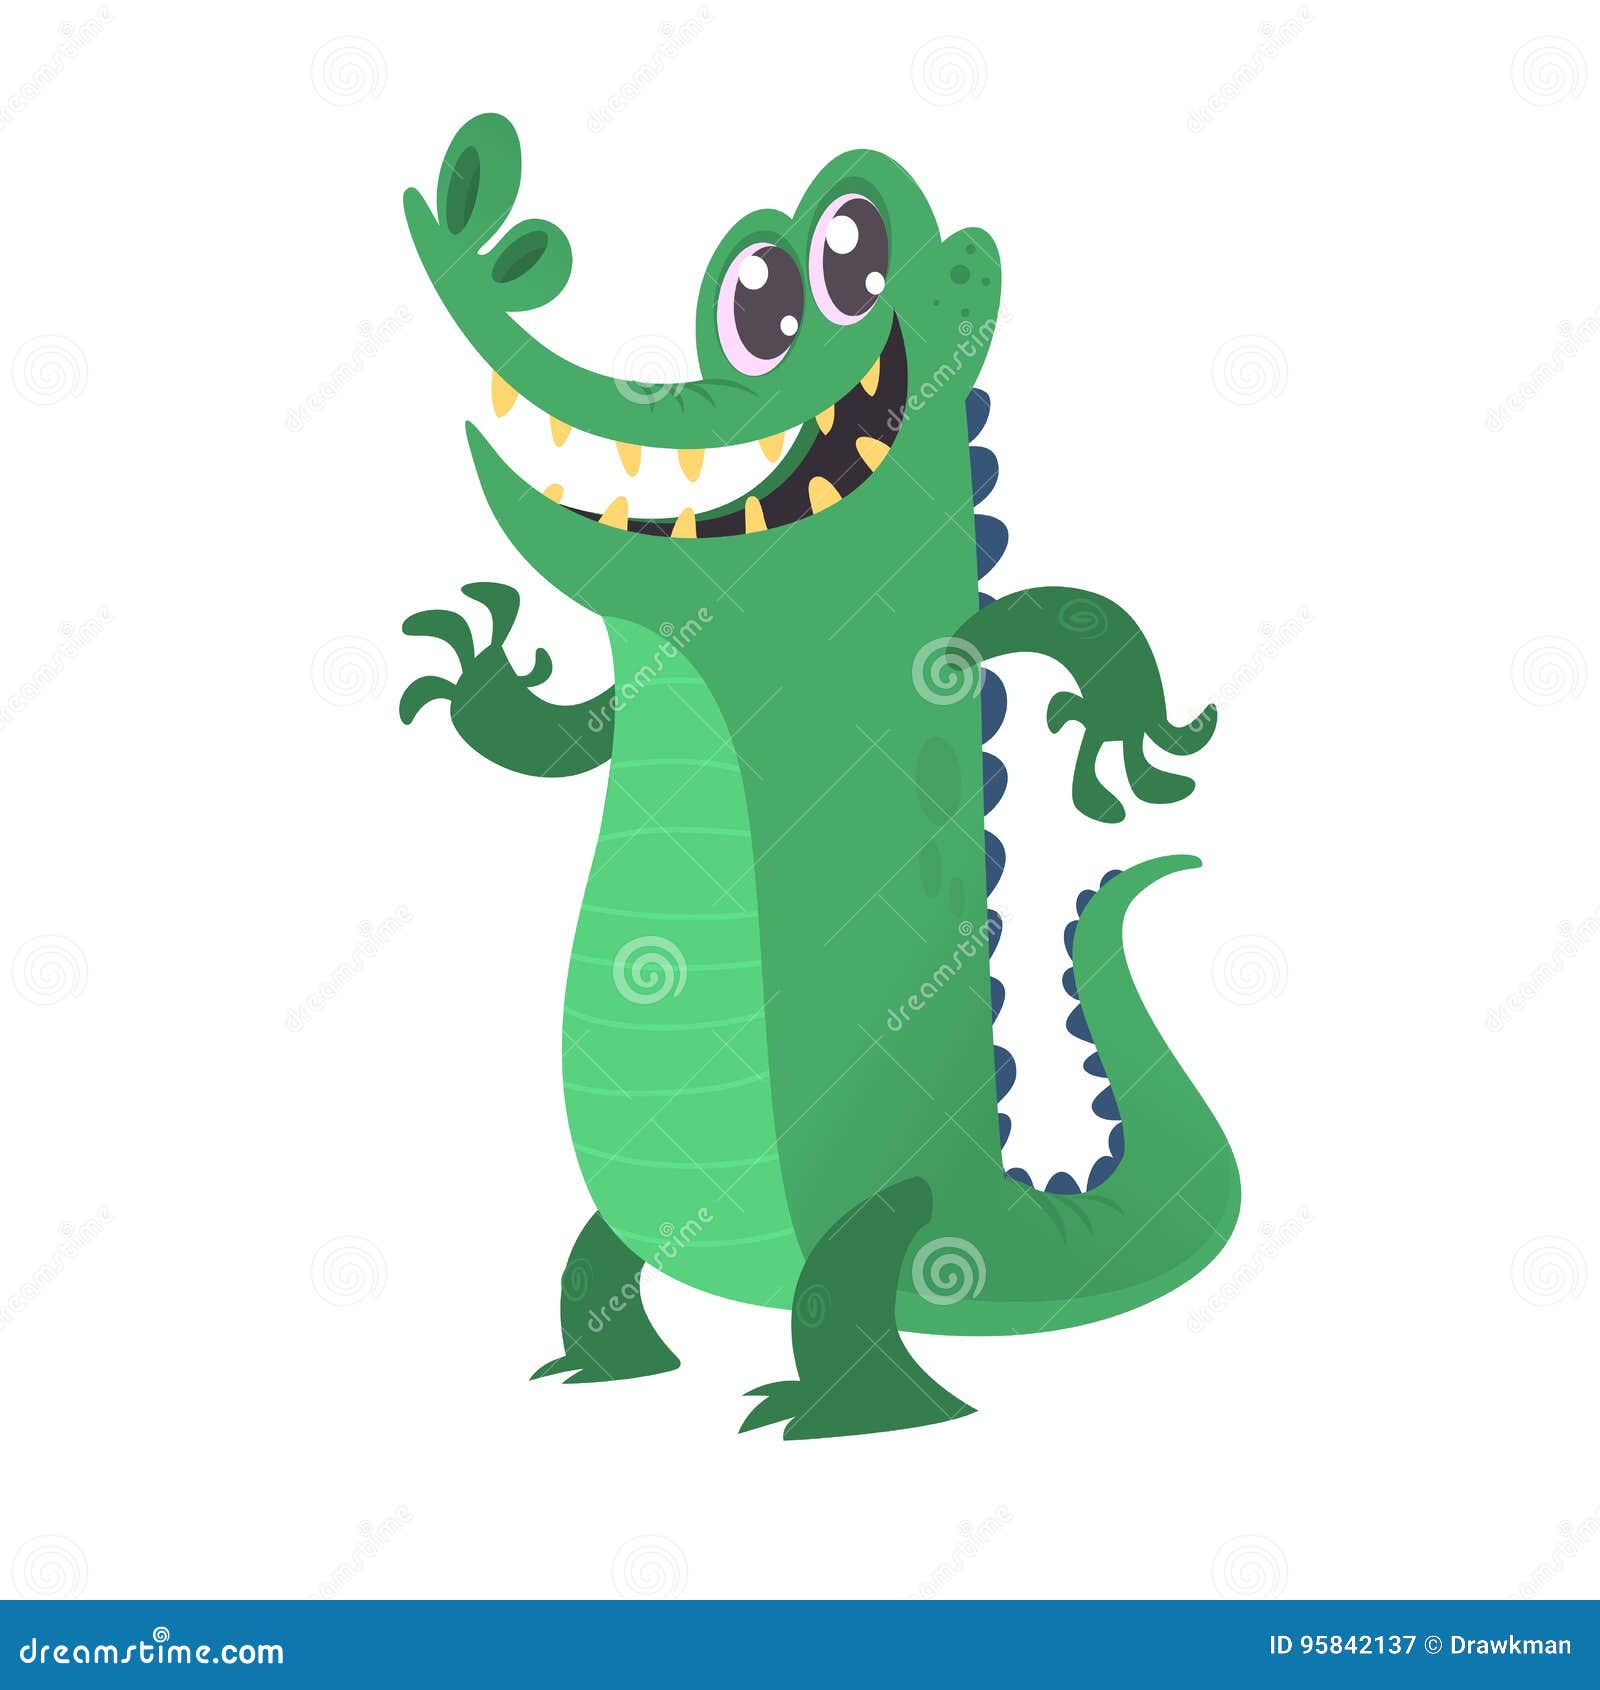 alligator icon on shirt